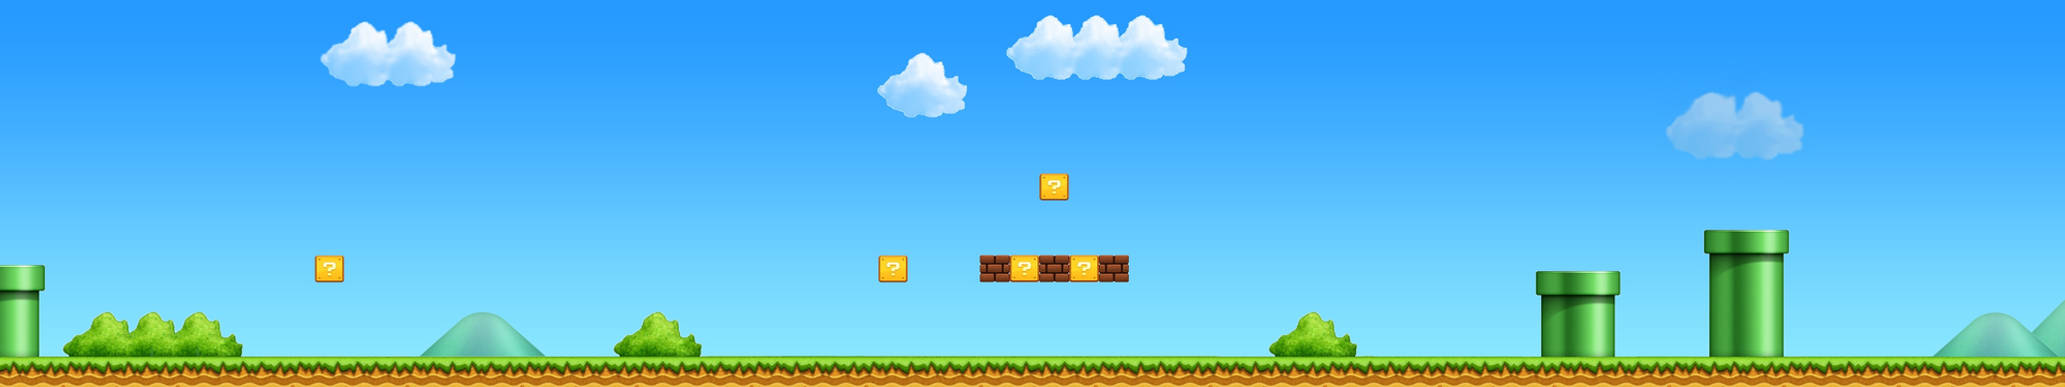 Simple Mario Level Background